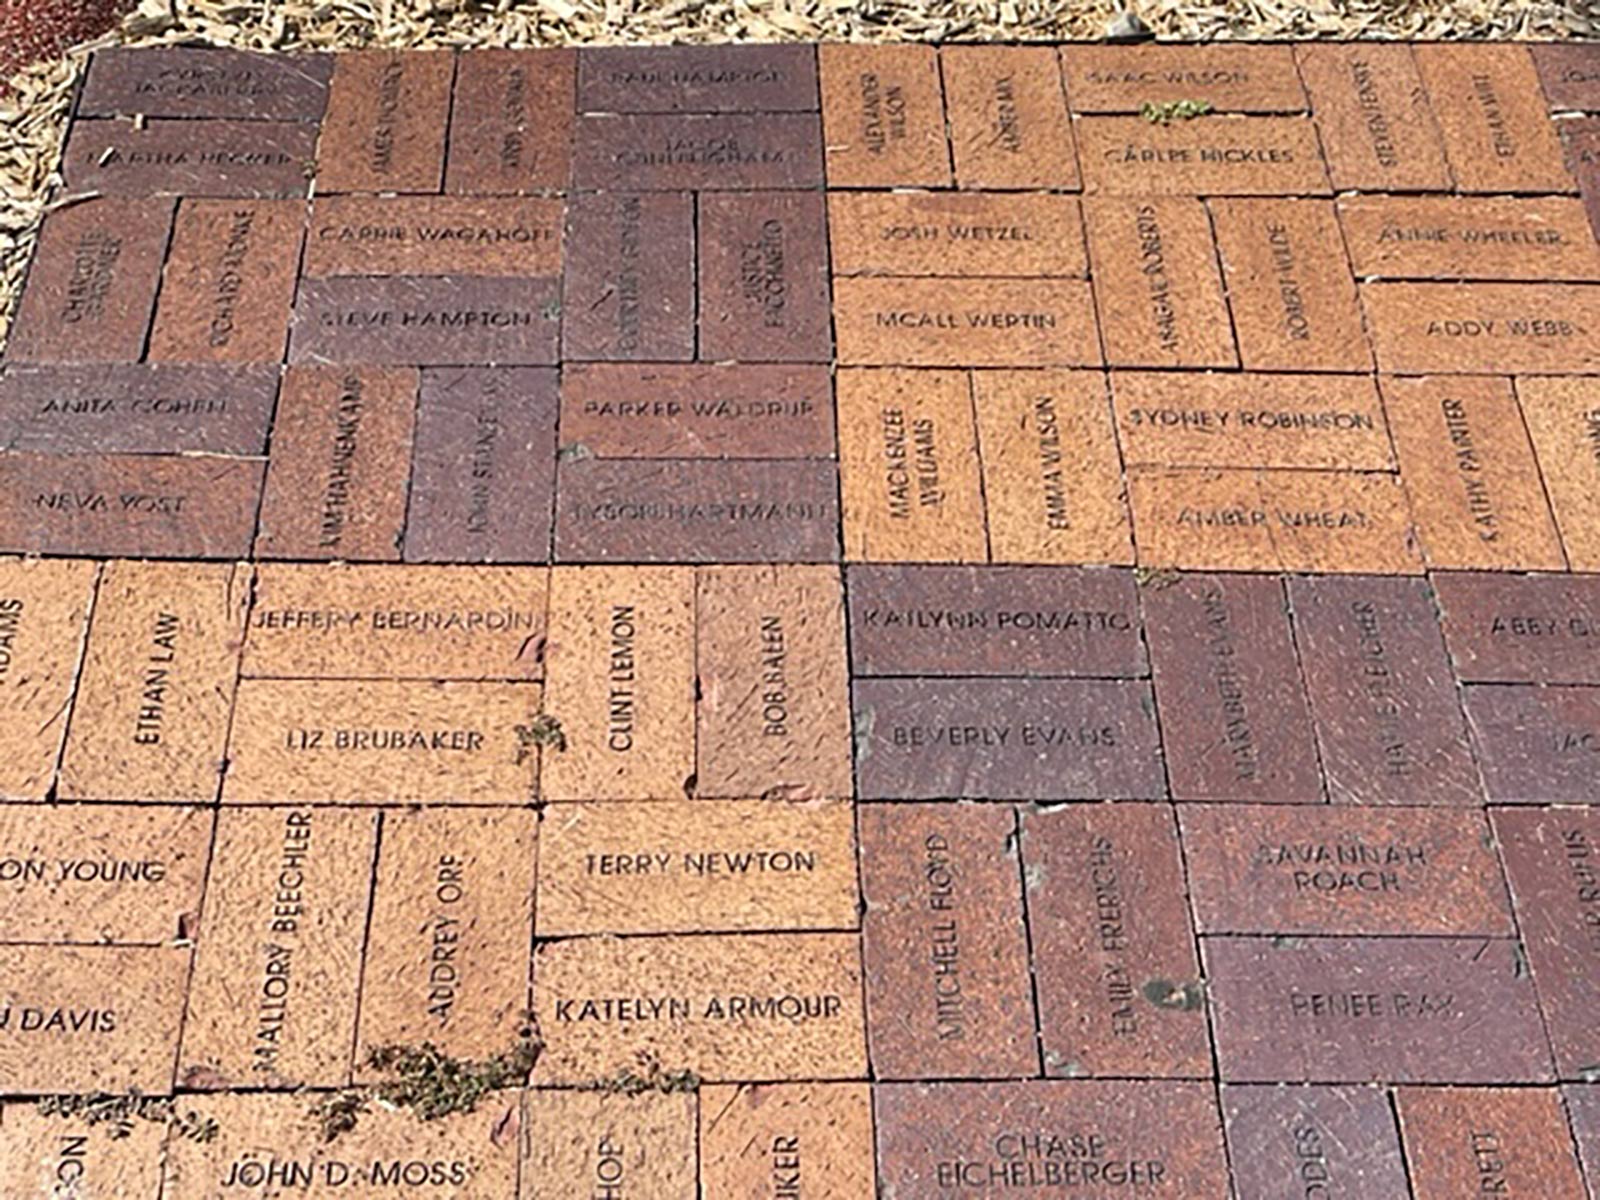 bricks with names printed on them at Davis Park